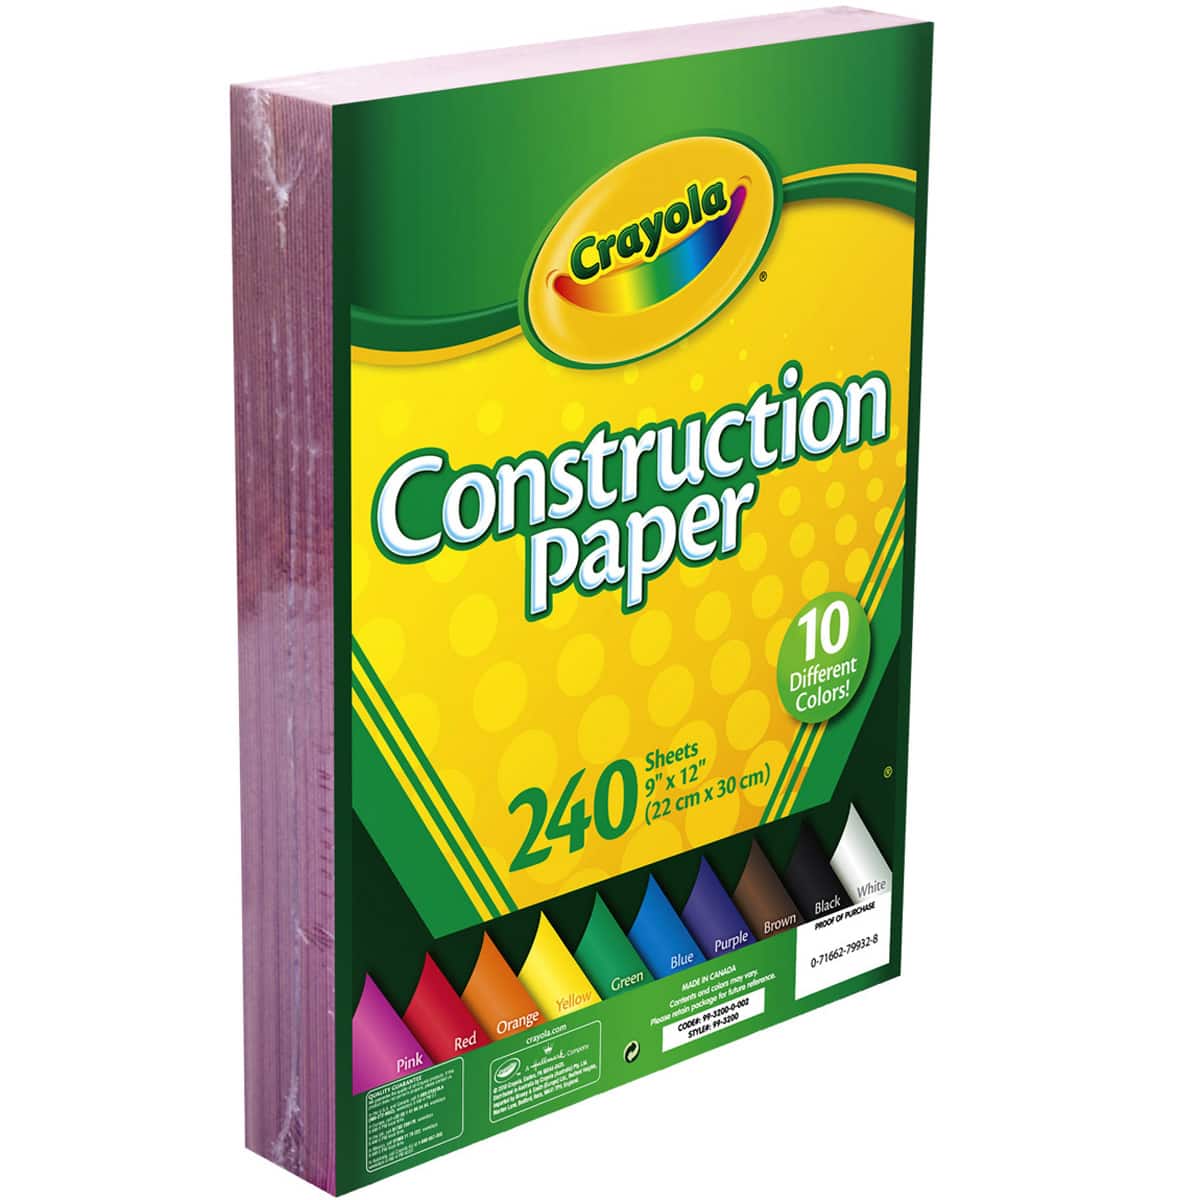 Crayola Construction Paper 9 x 12, 8 Classic Colors (96 Sheets